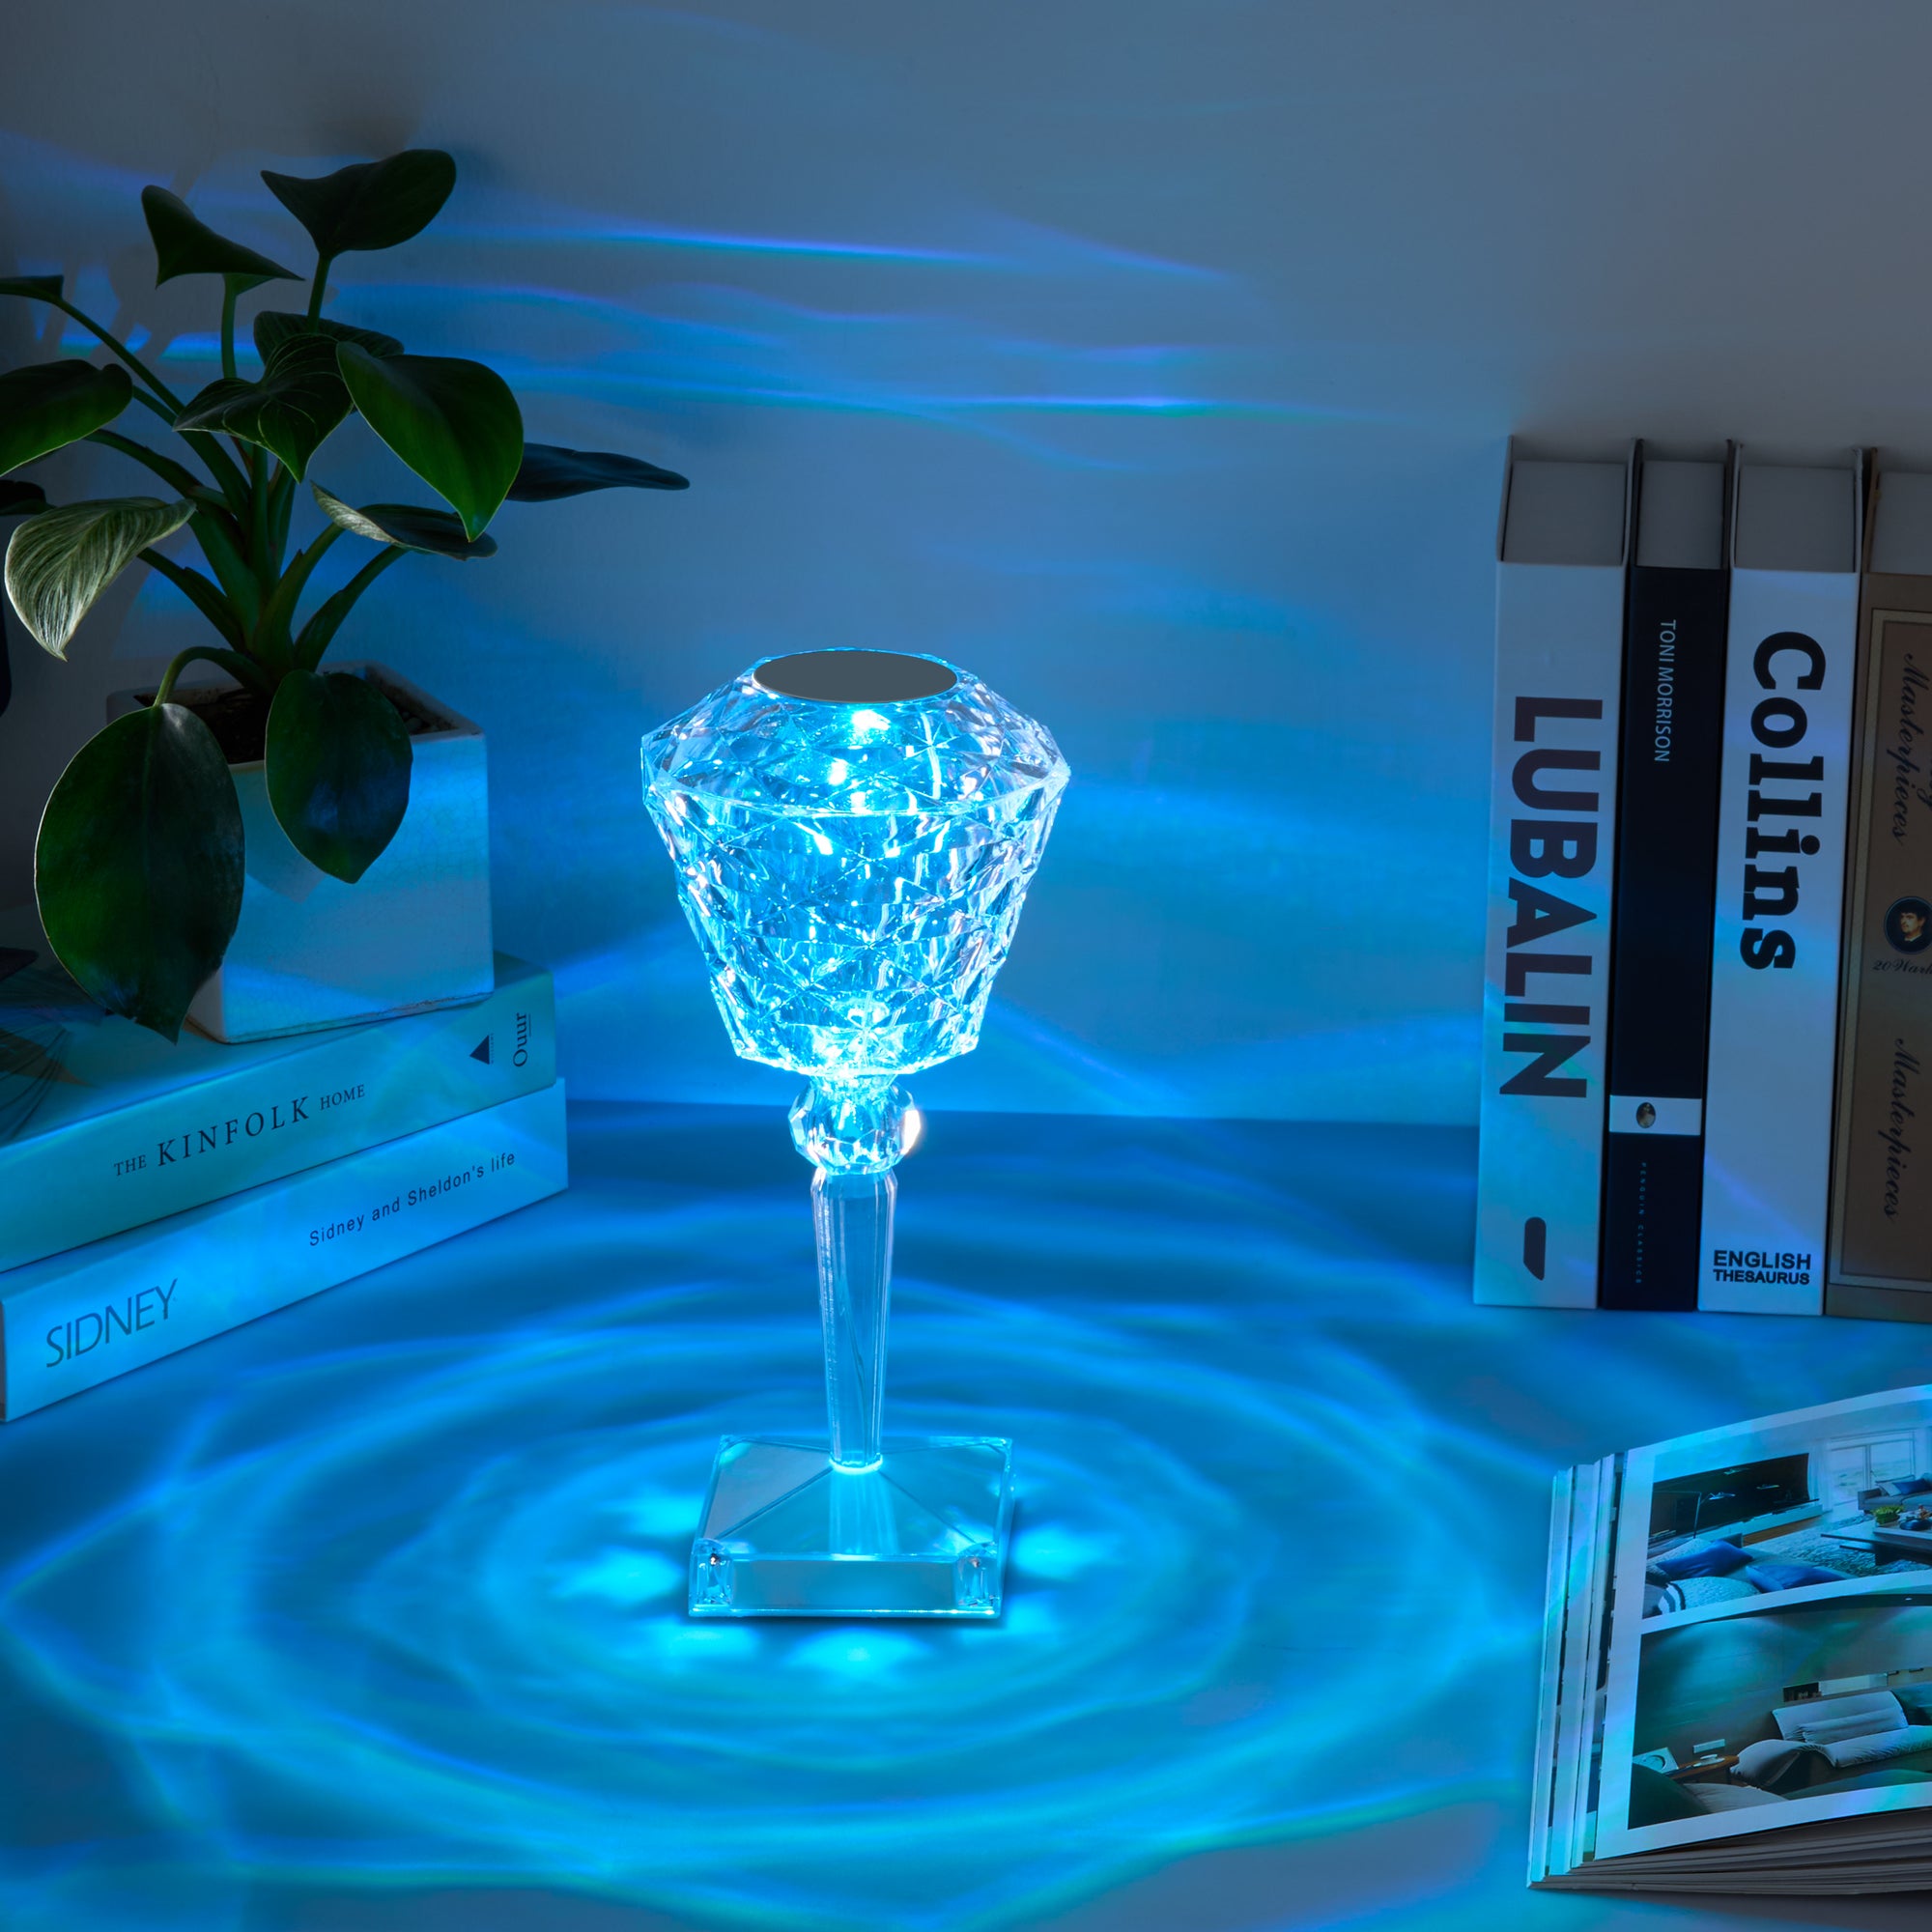 Rose Table Lamp Crystal Light